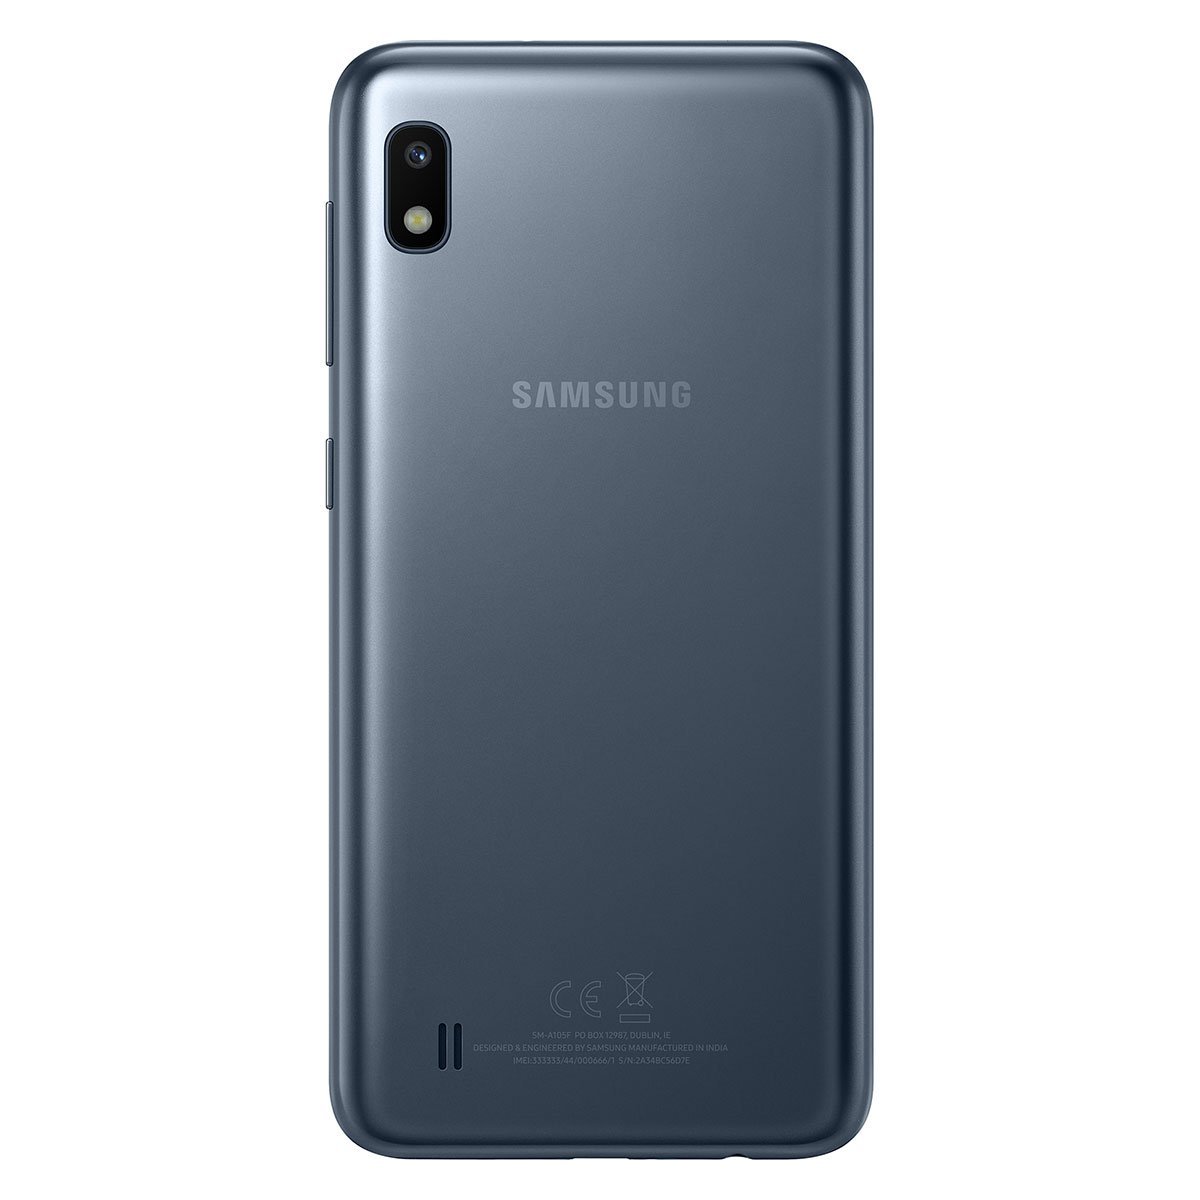 Juegos En Linea Para Celulares A10 / Samsung A10 - 32gb Azul - ¡precio Imperdible! - $ 4.500,00 ...